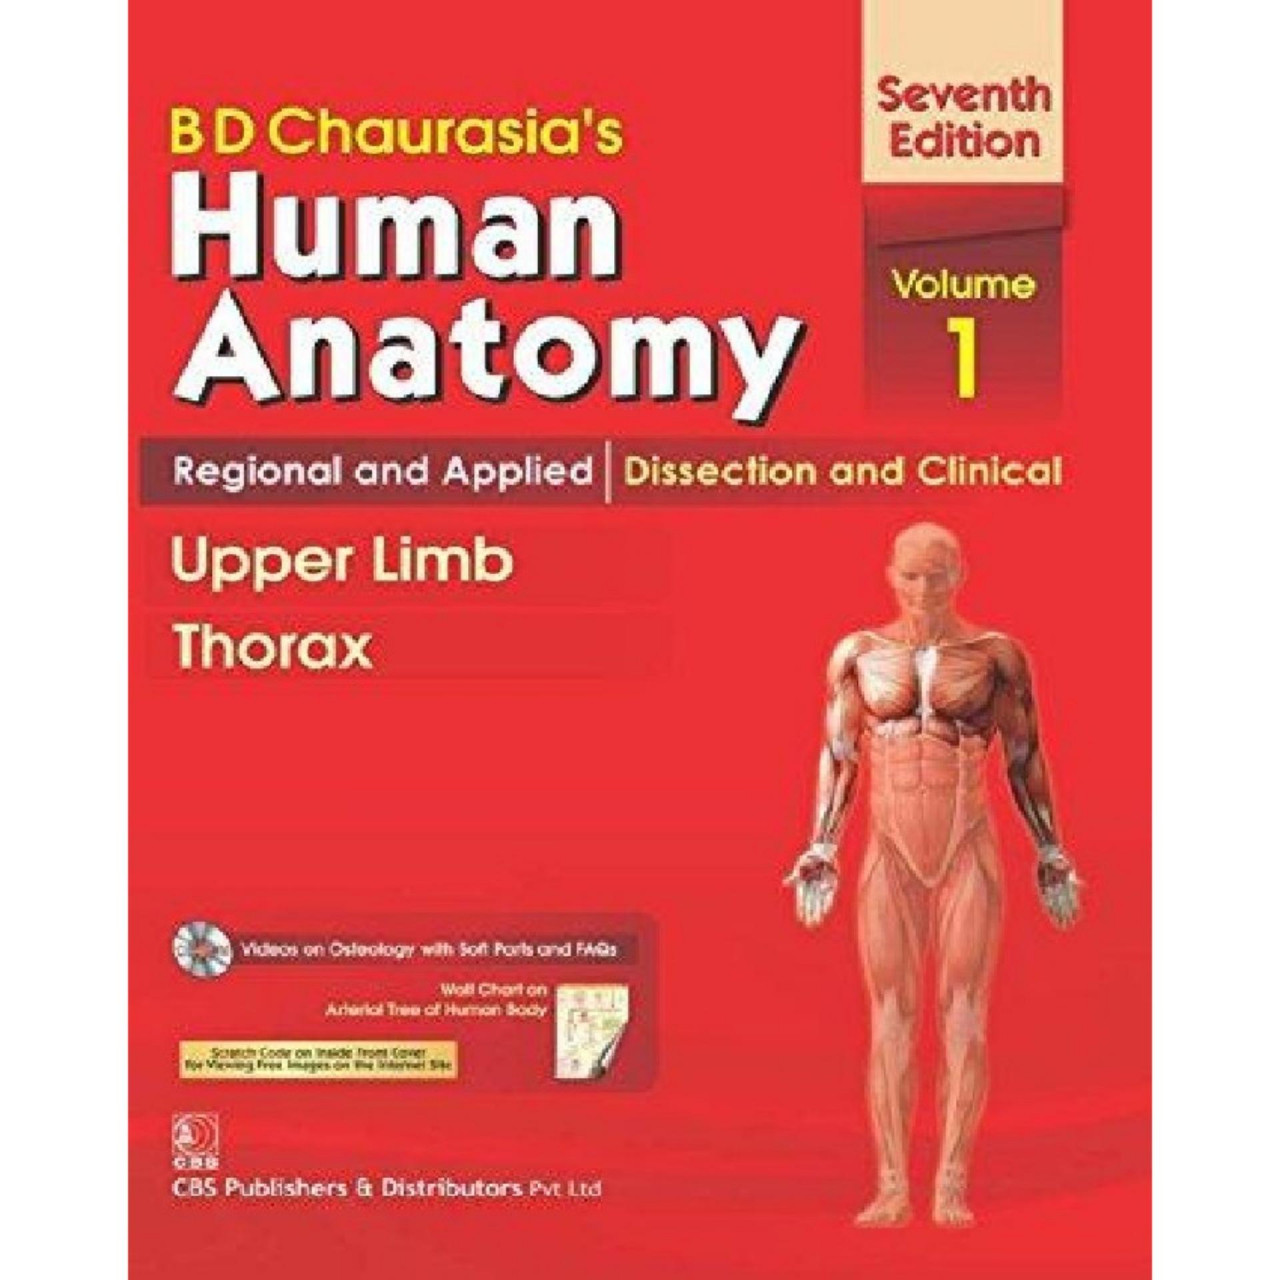 Photo of BD Chaurasia’s Human Anatomy Upper Limb Thorax Volume 1 PDF Free Download